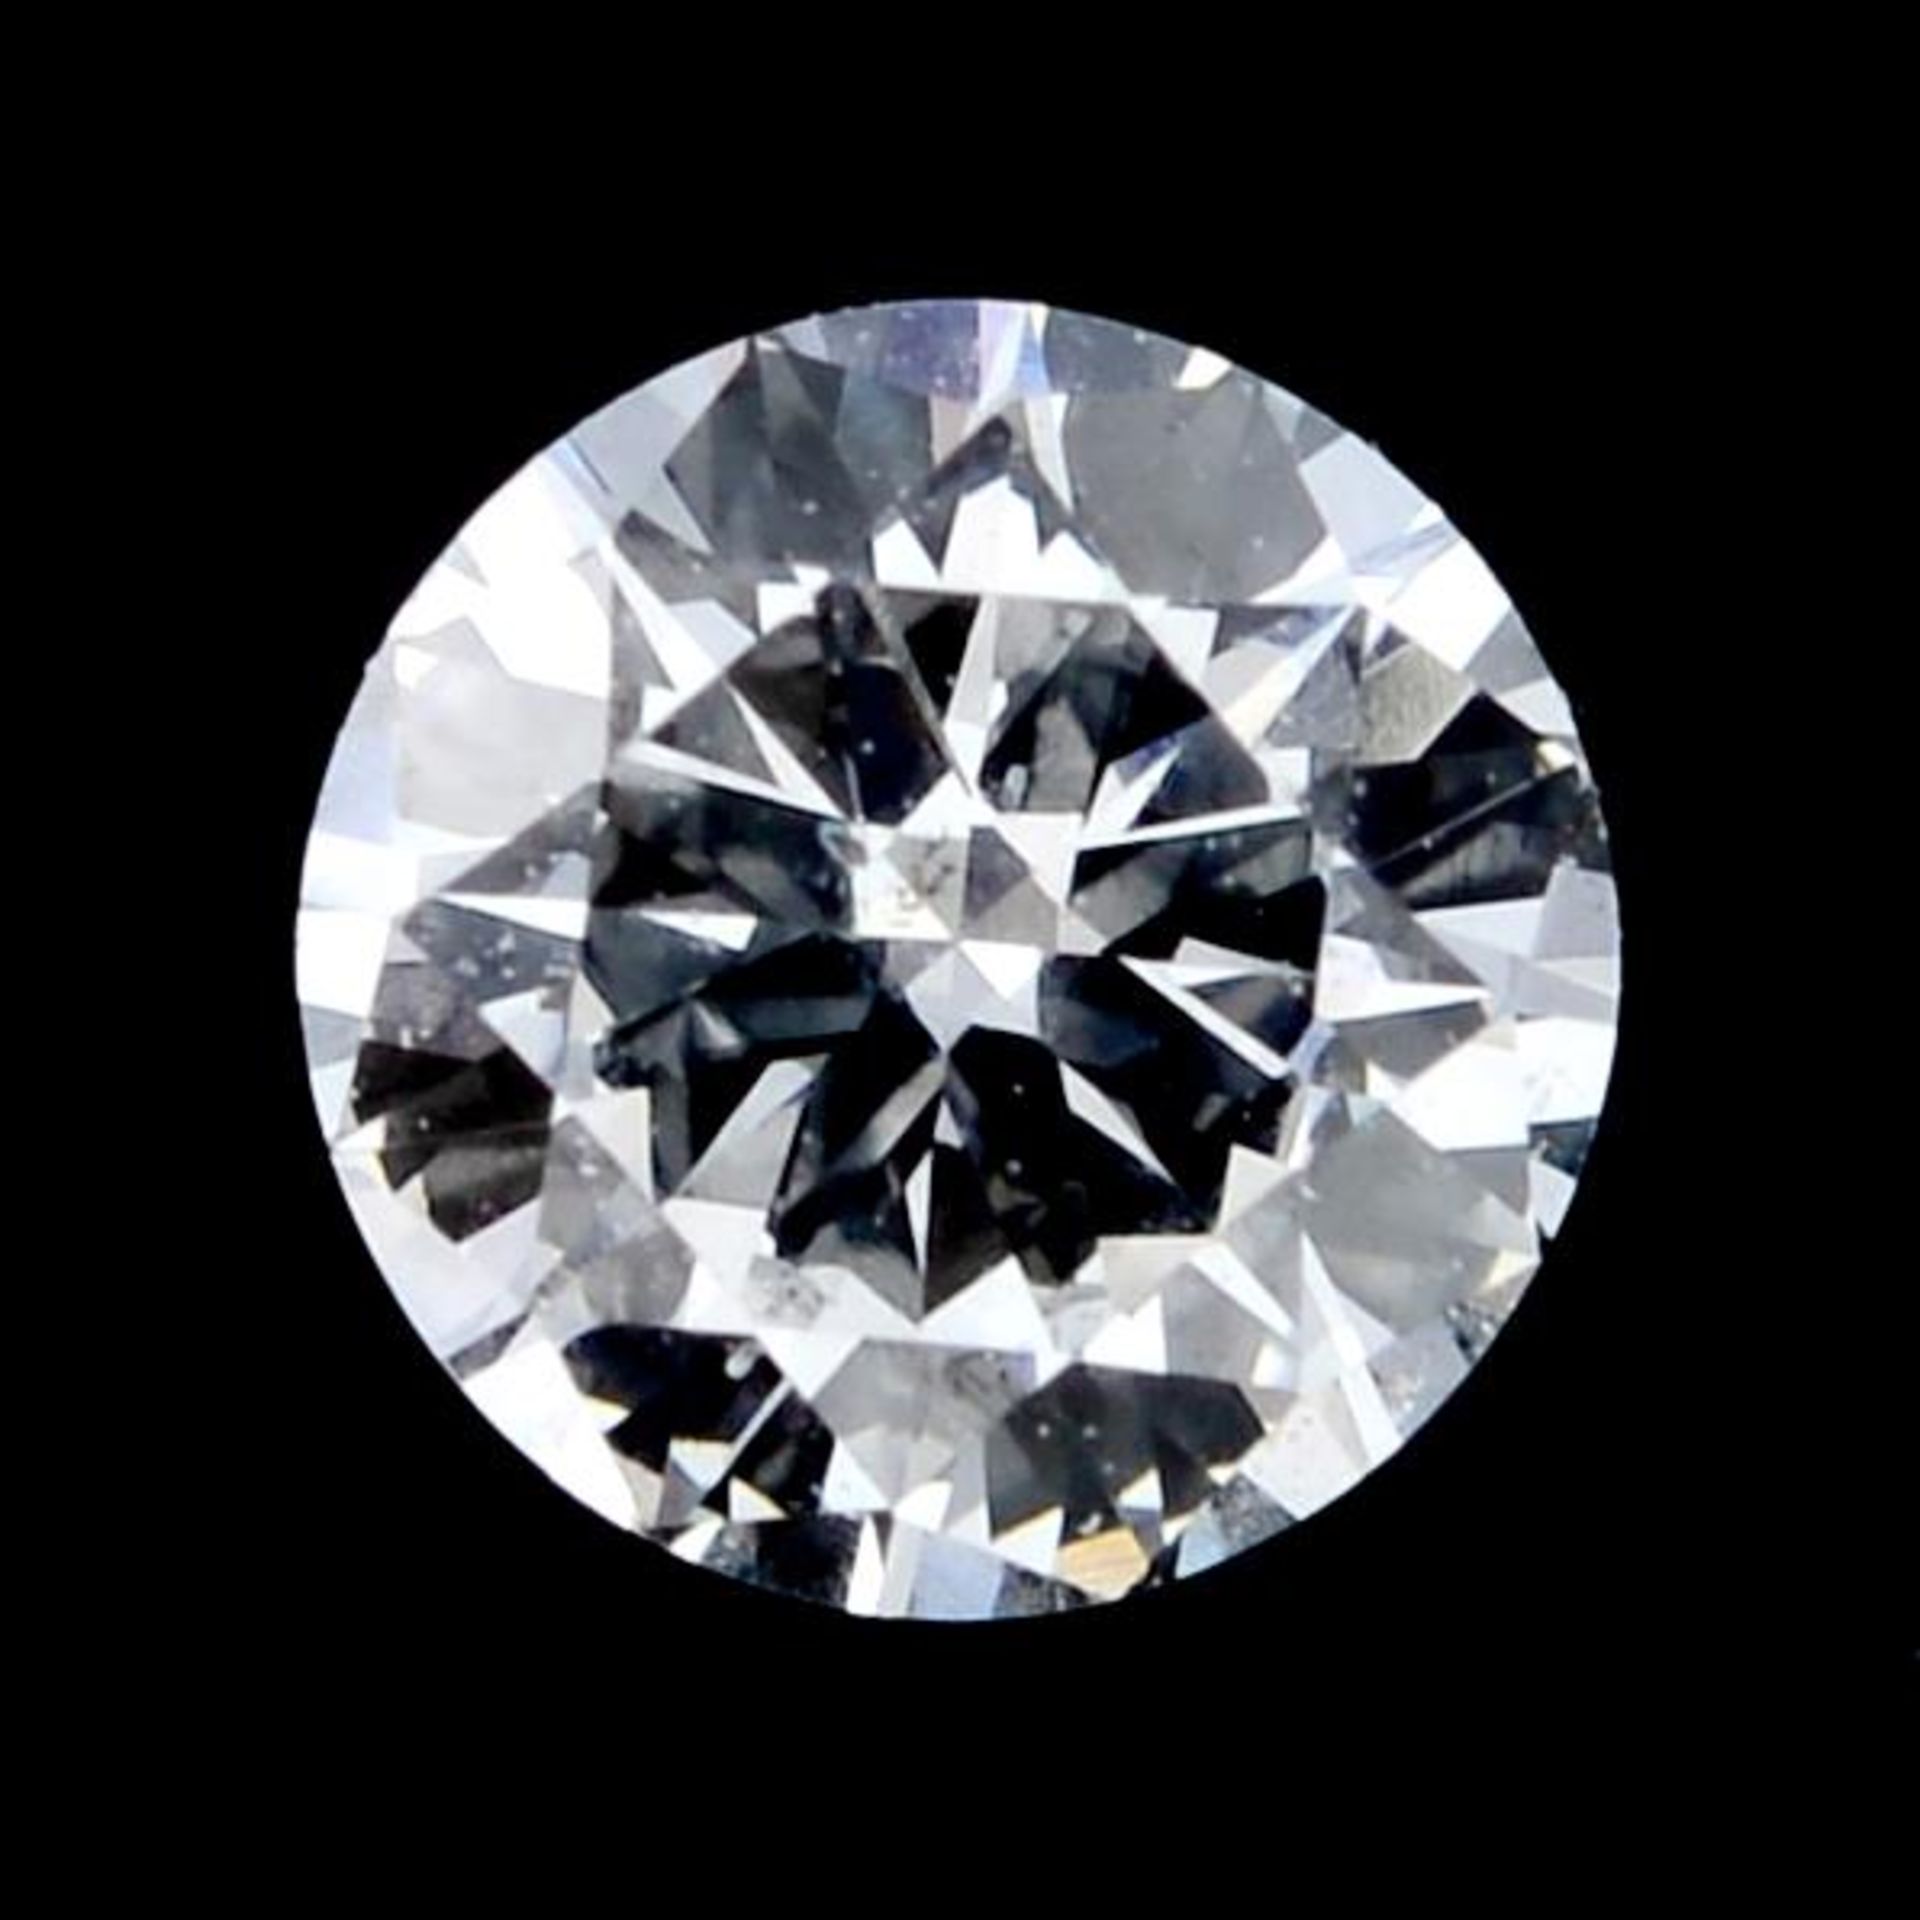 A brilliant cut diamond weighing 0.21ct.